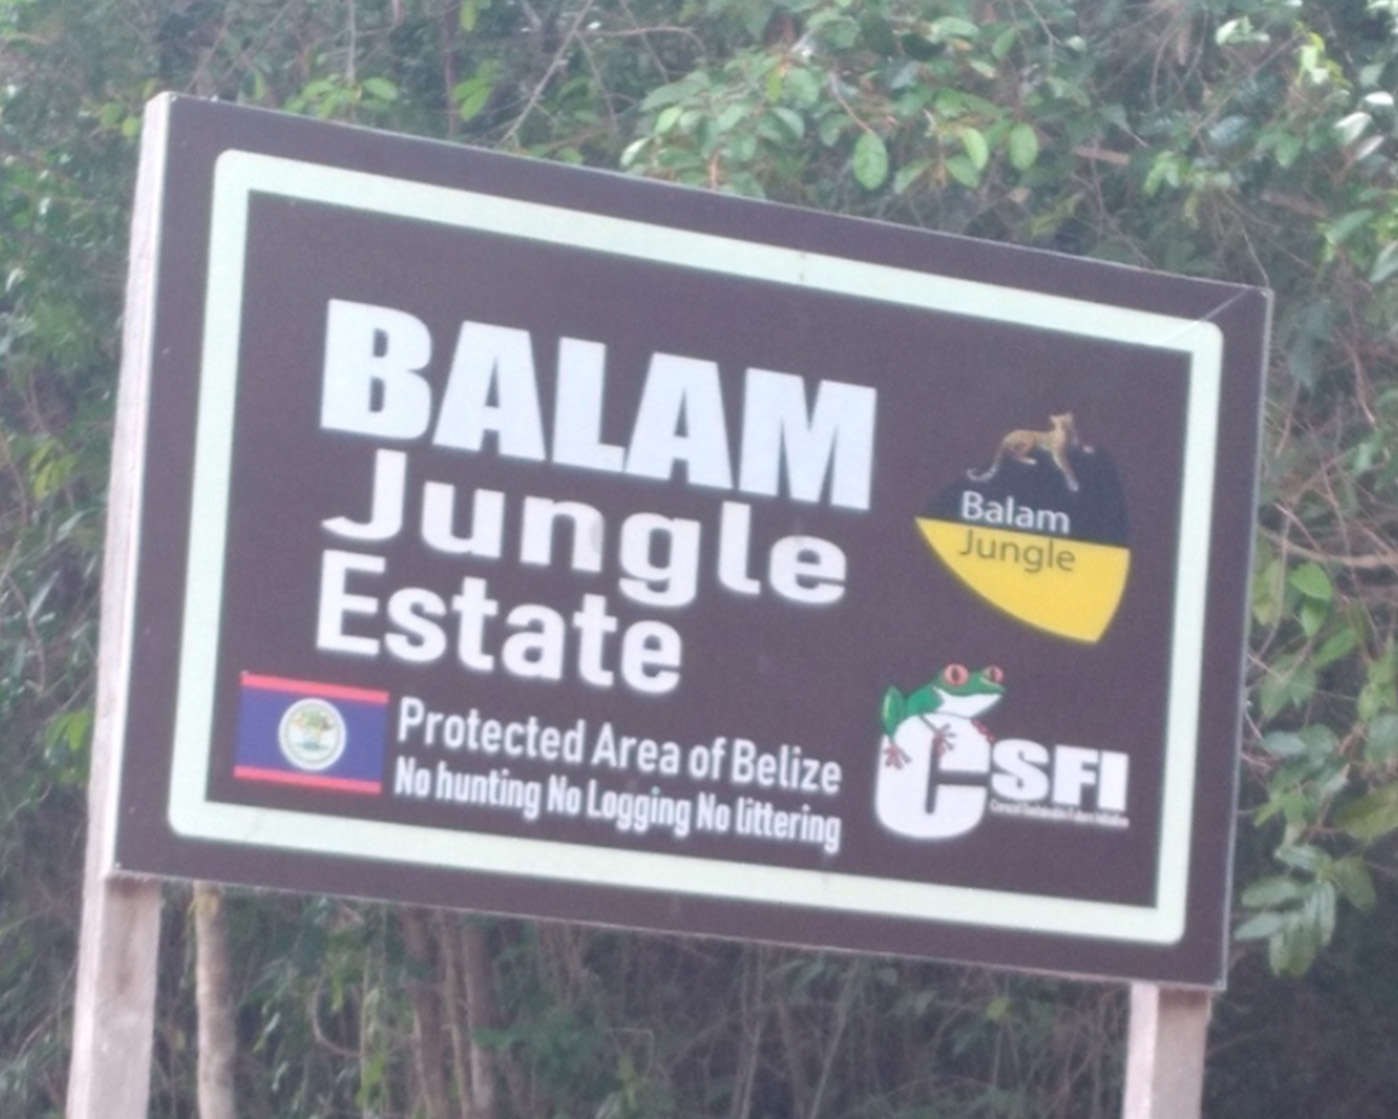 Image of Balaman Jungle Estate for sale.